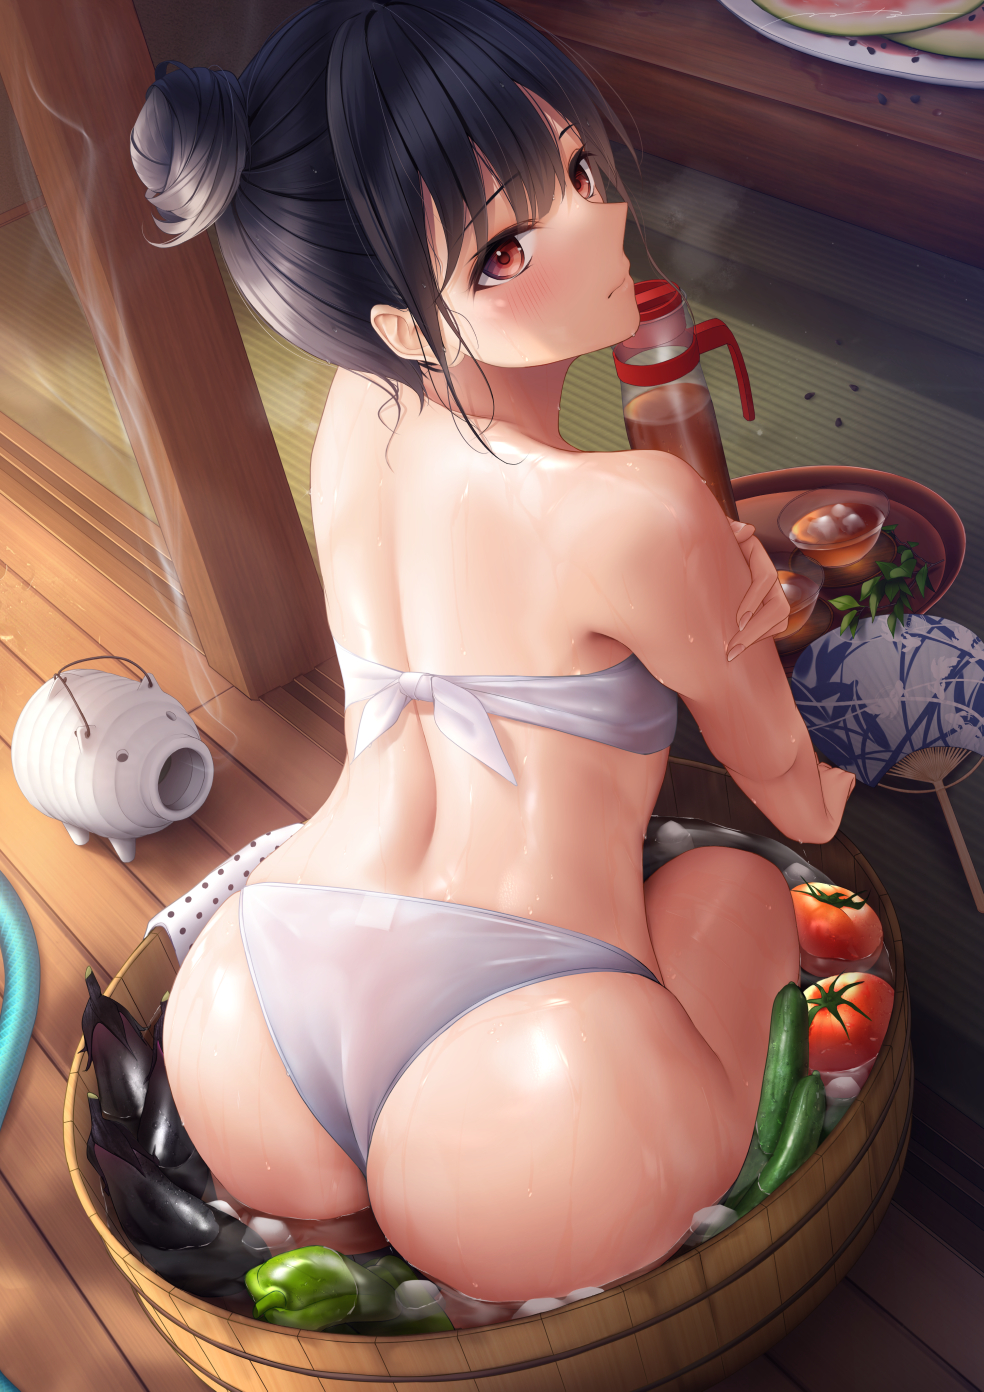 Anime 984x1392 Mhru ass anime girls anime food vegetables tomatoes pickles red eyes dark hair rear view women indoors kneeling bikini high angle back